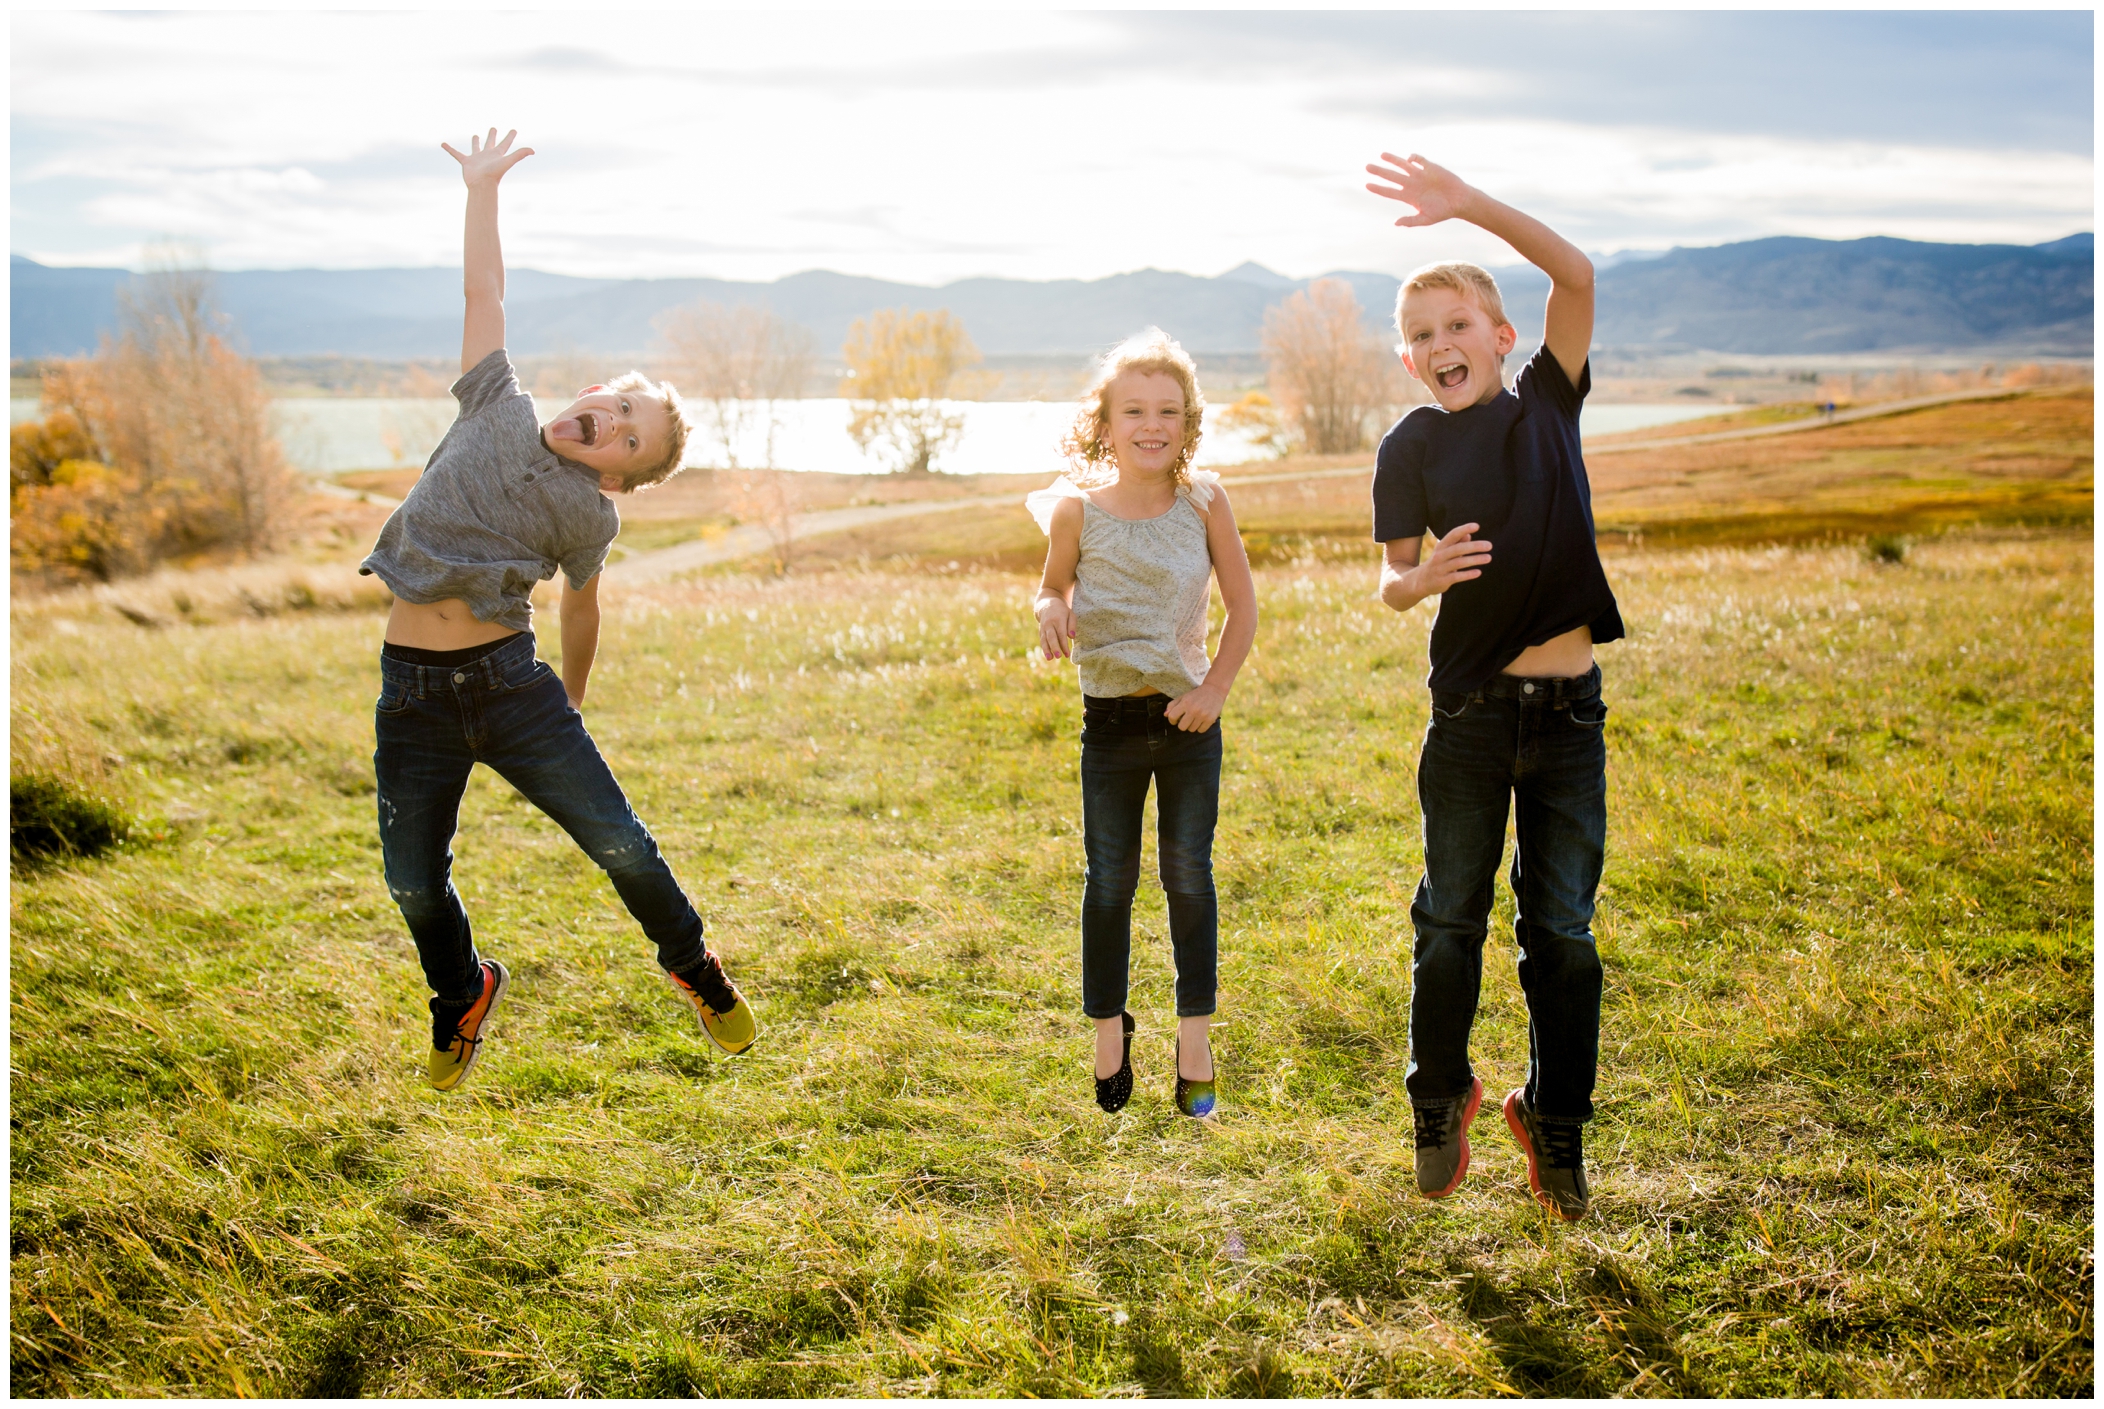 Longmont family portrais at Coot Lake Boulder by Colorado photographer Plum Pretty Photography